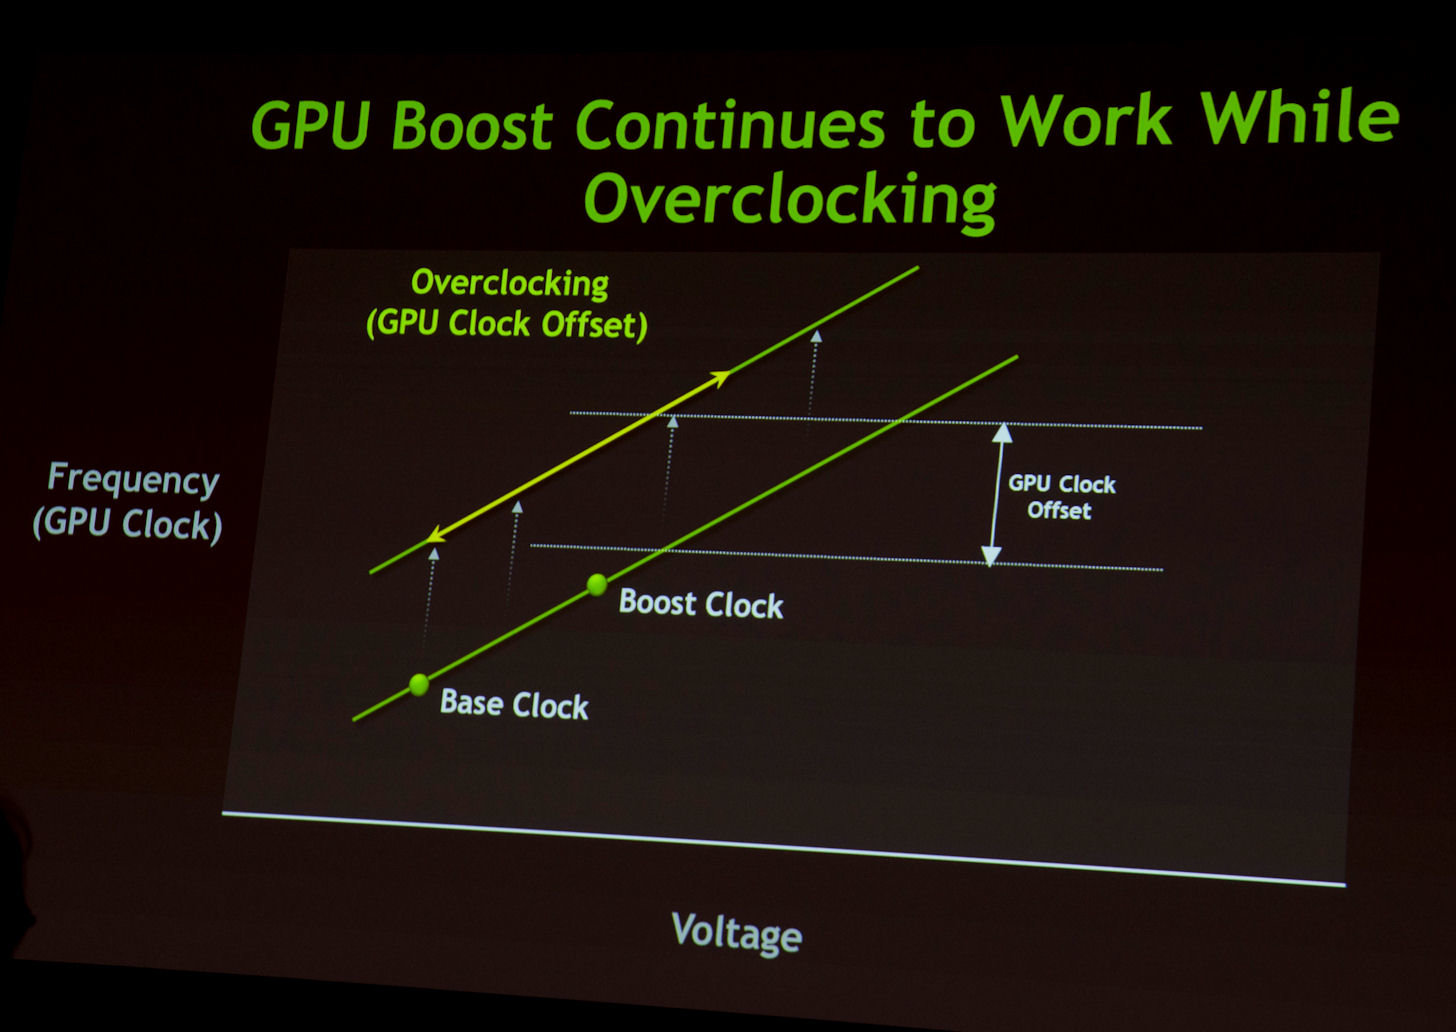 Erster Test der Nvidia GeForce GTX 680